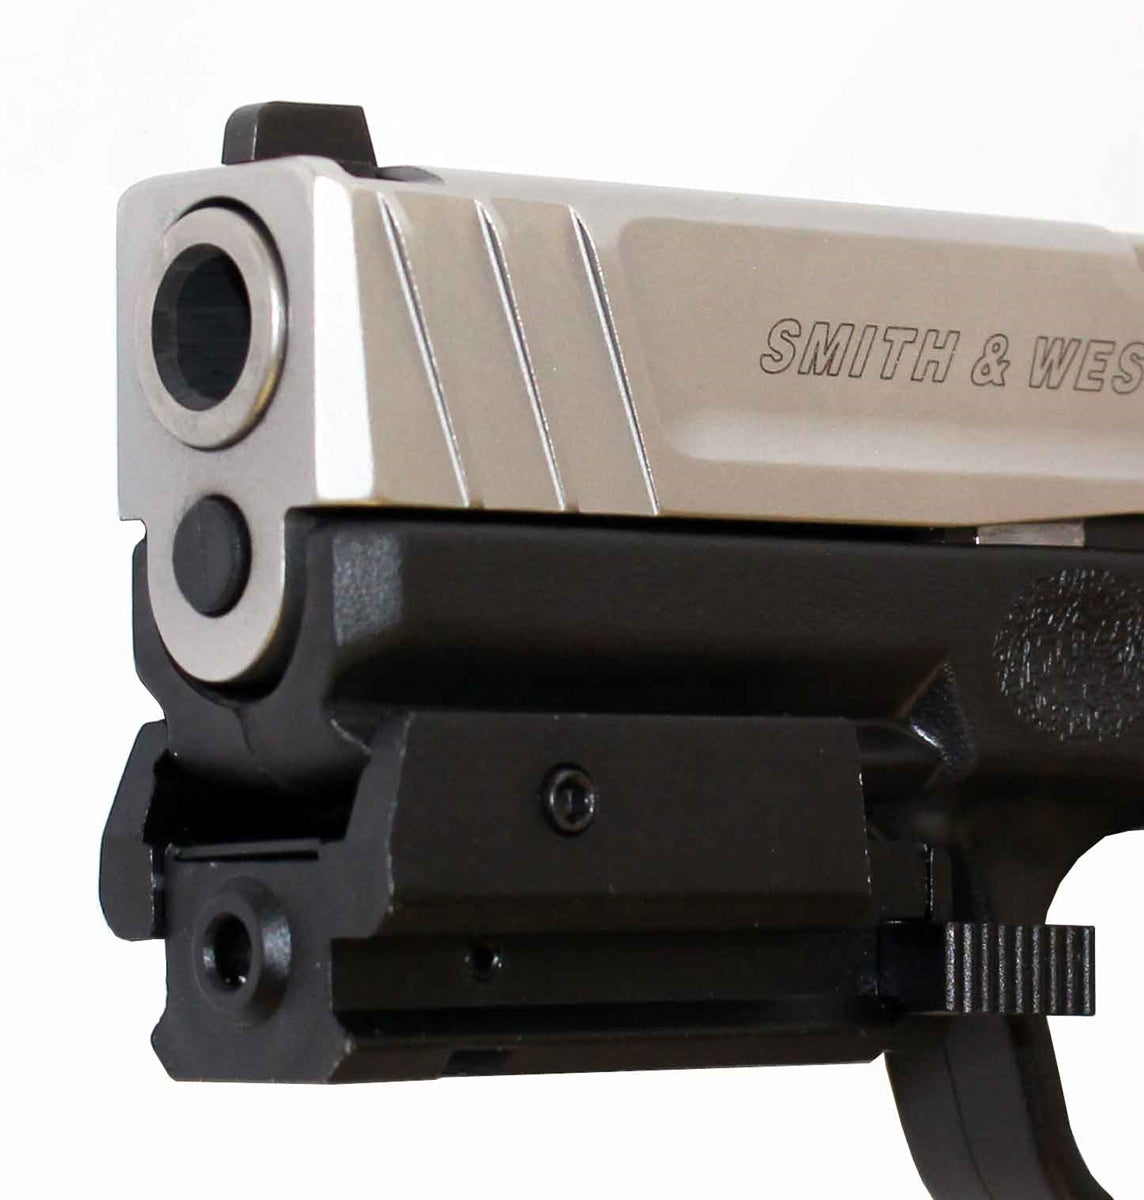 red laser sight for handguns.